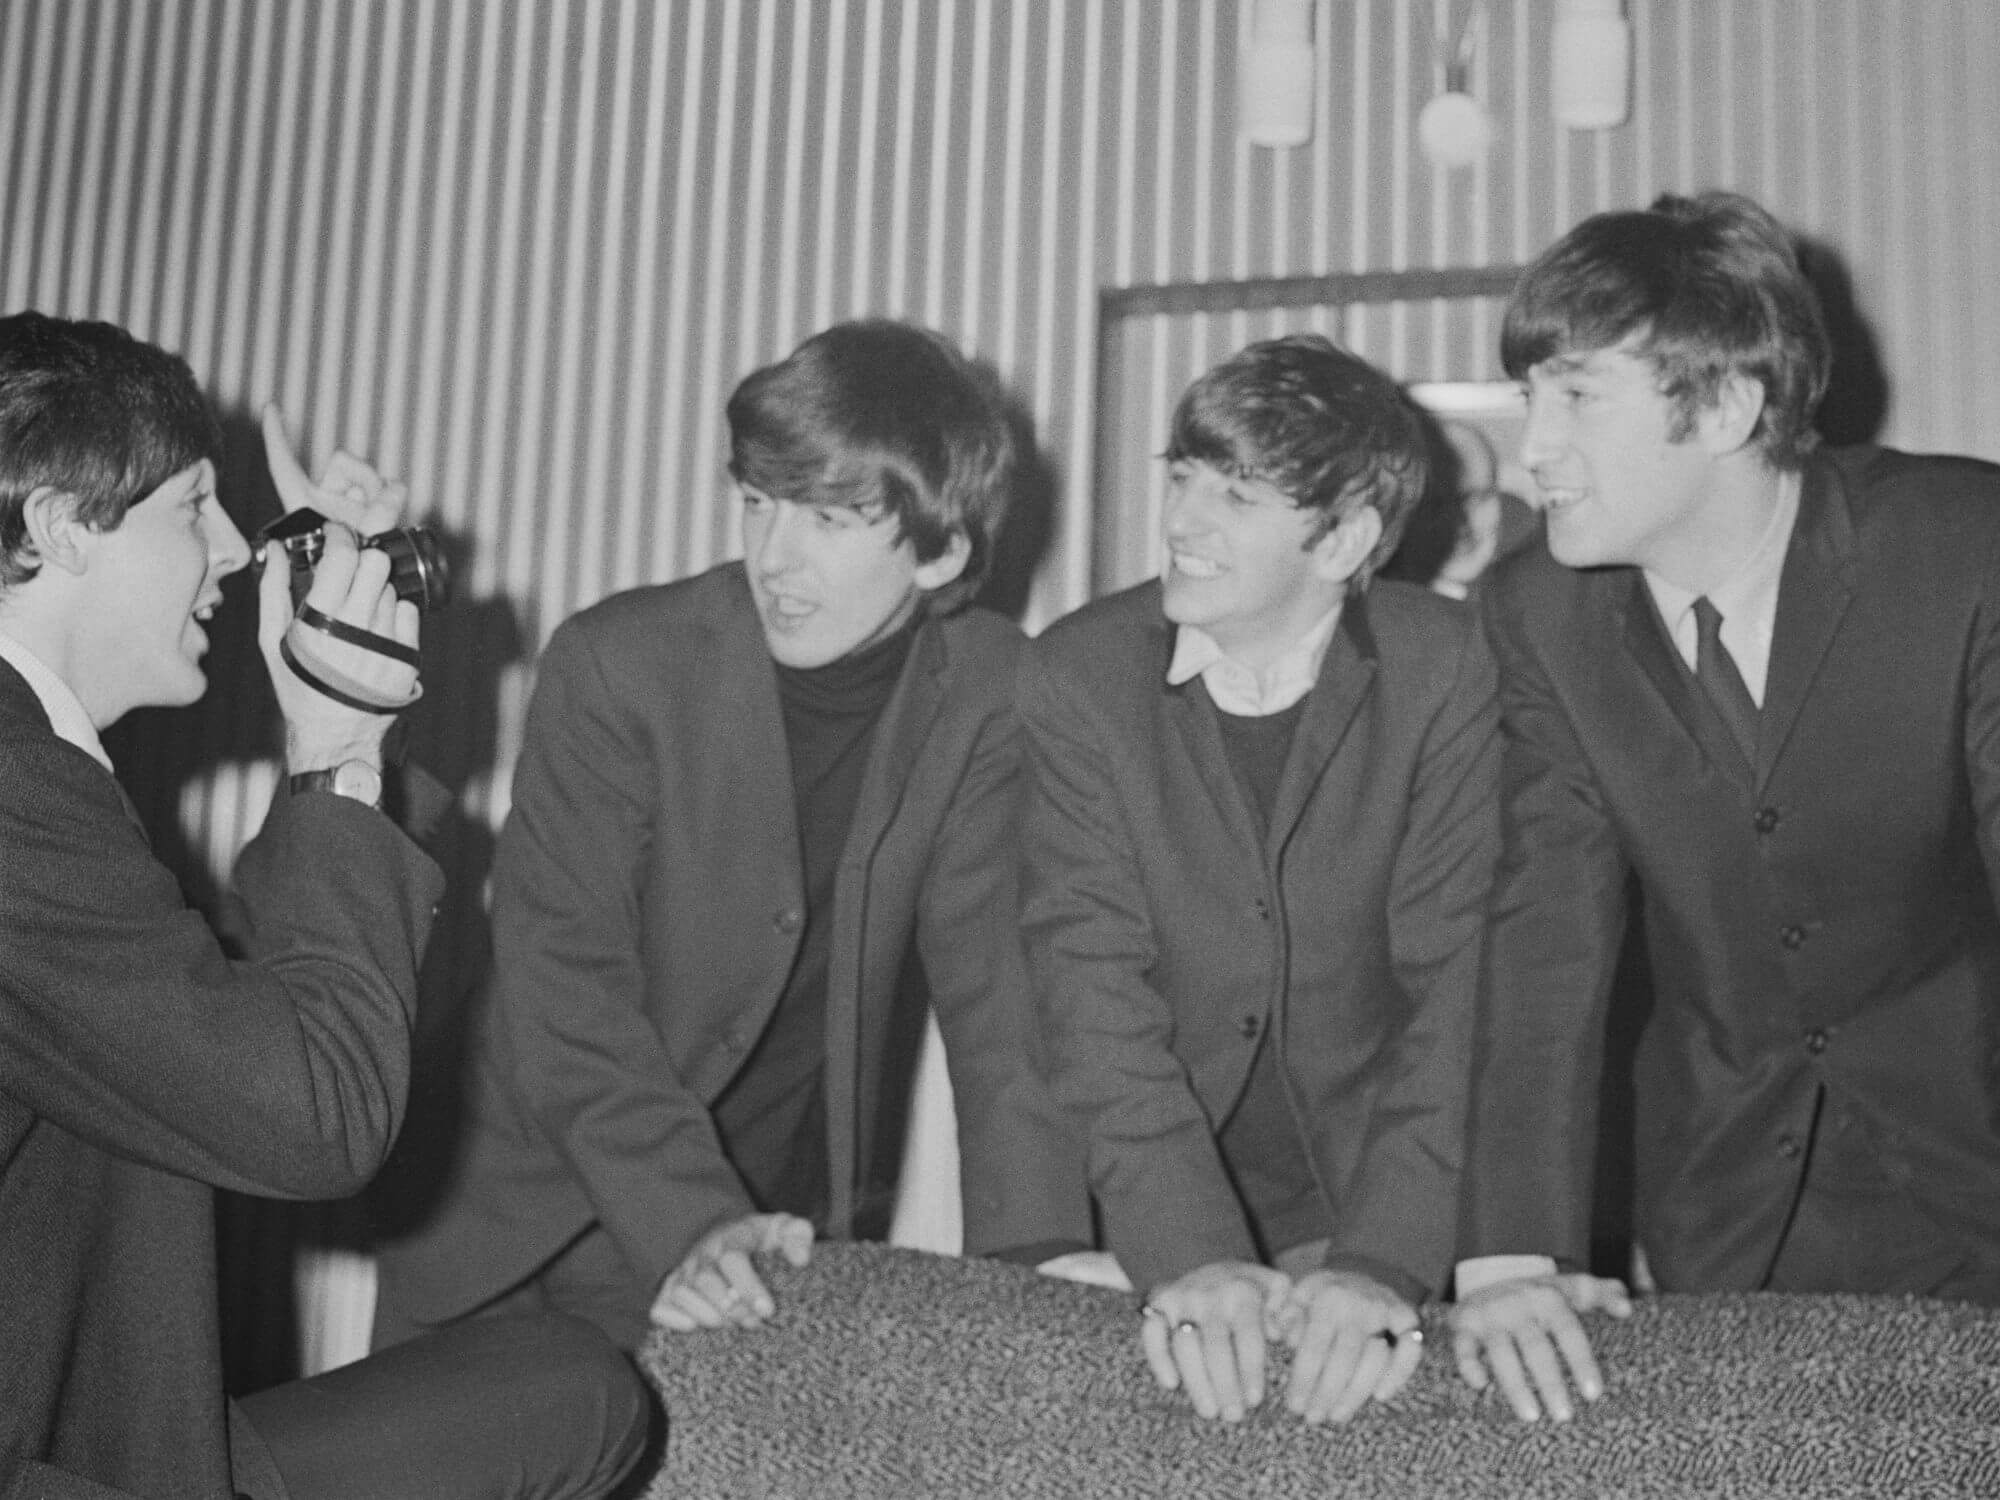 Paul McCartney photographing Beatles members in 1964